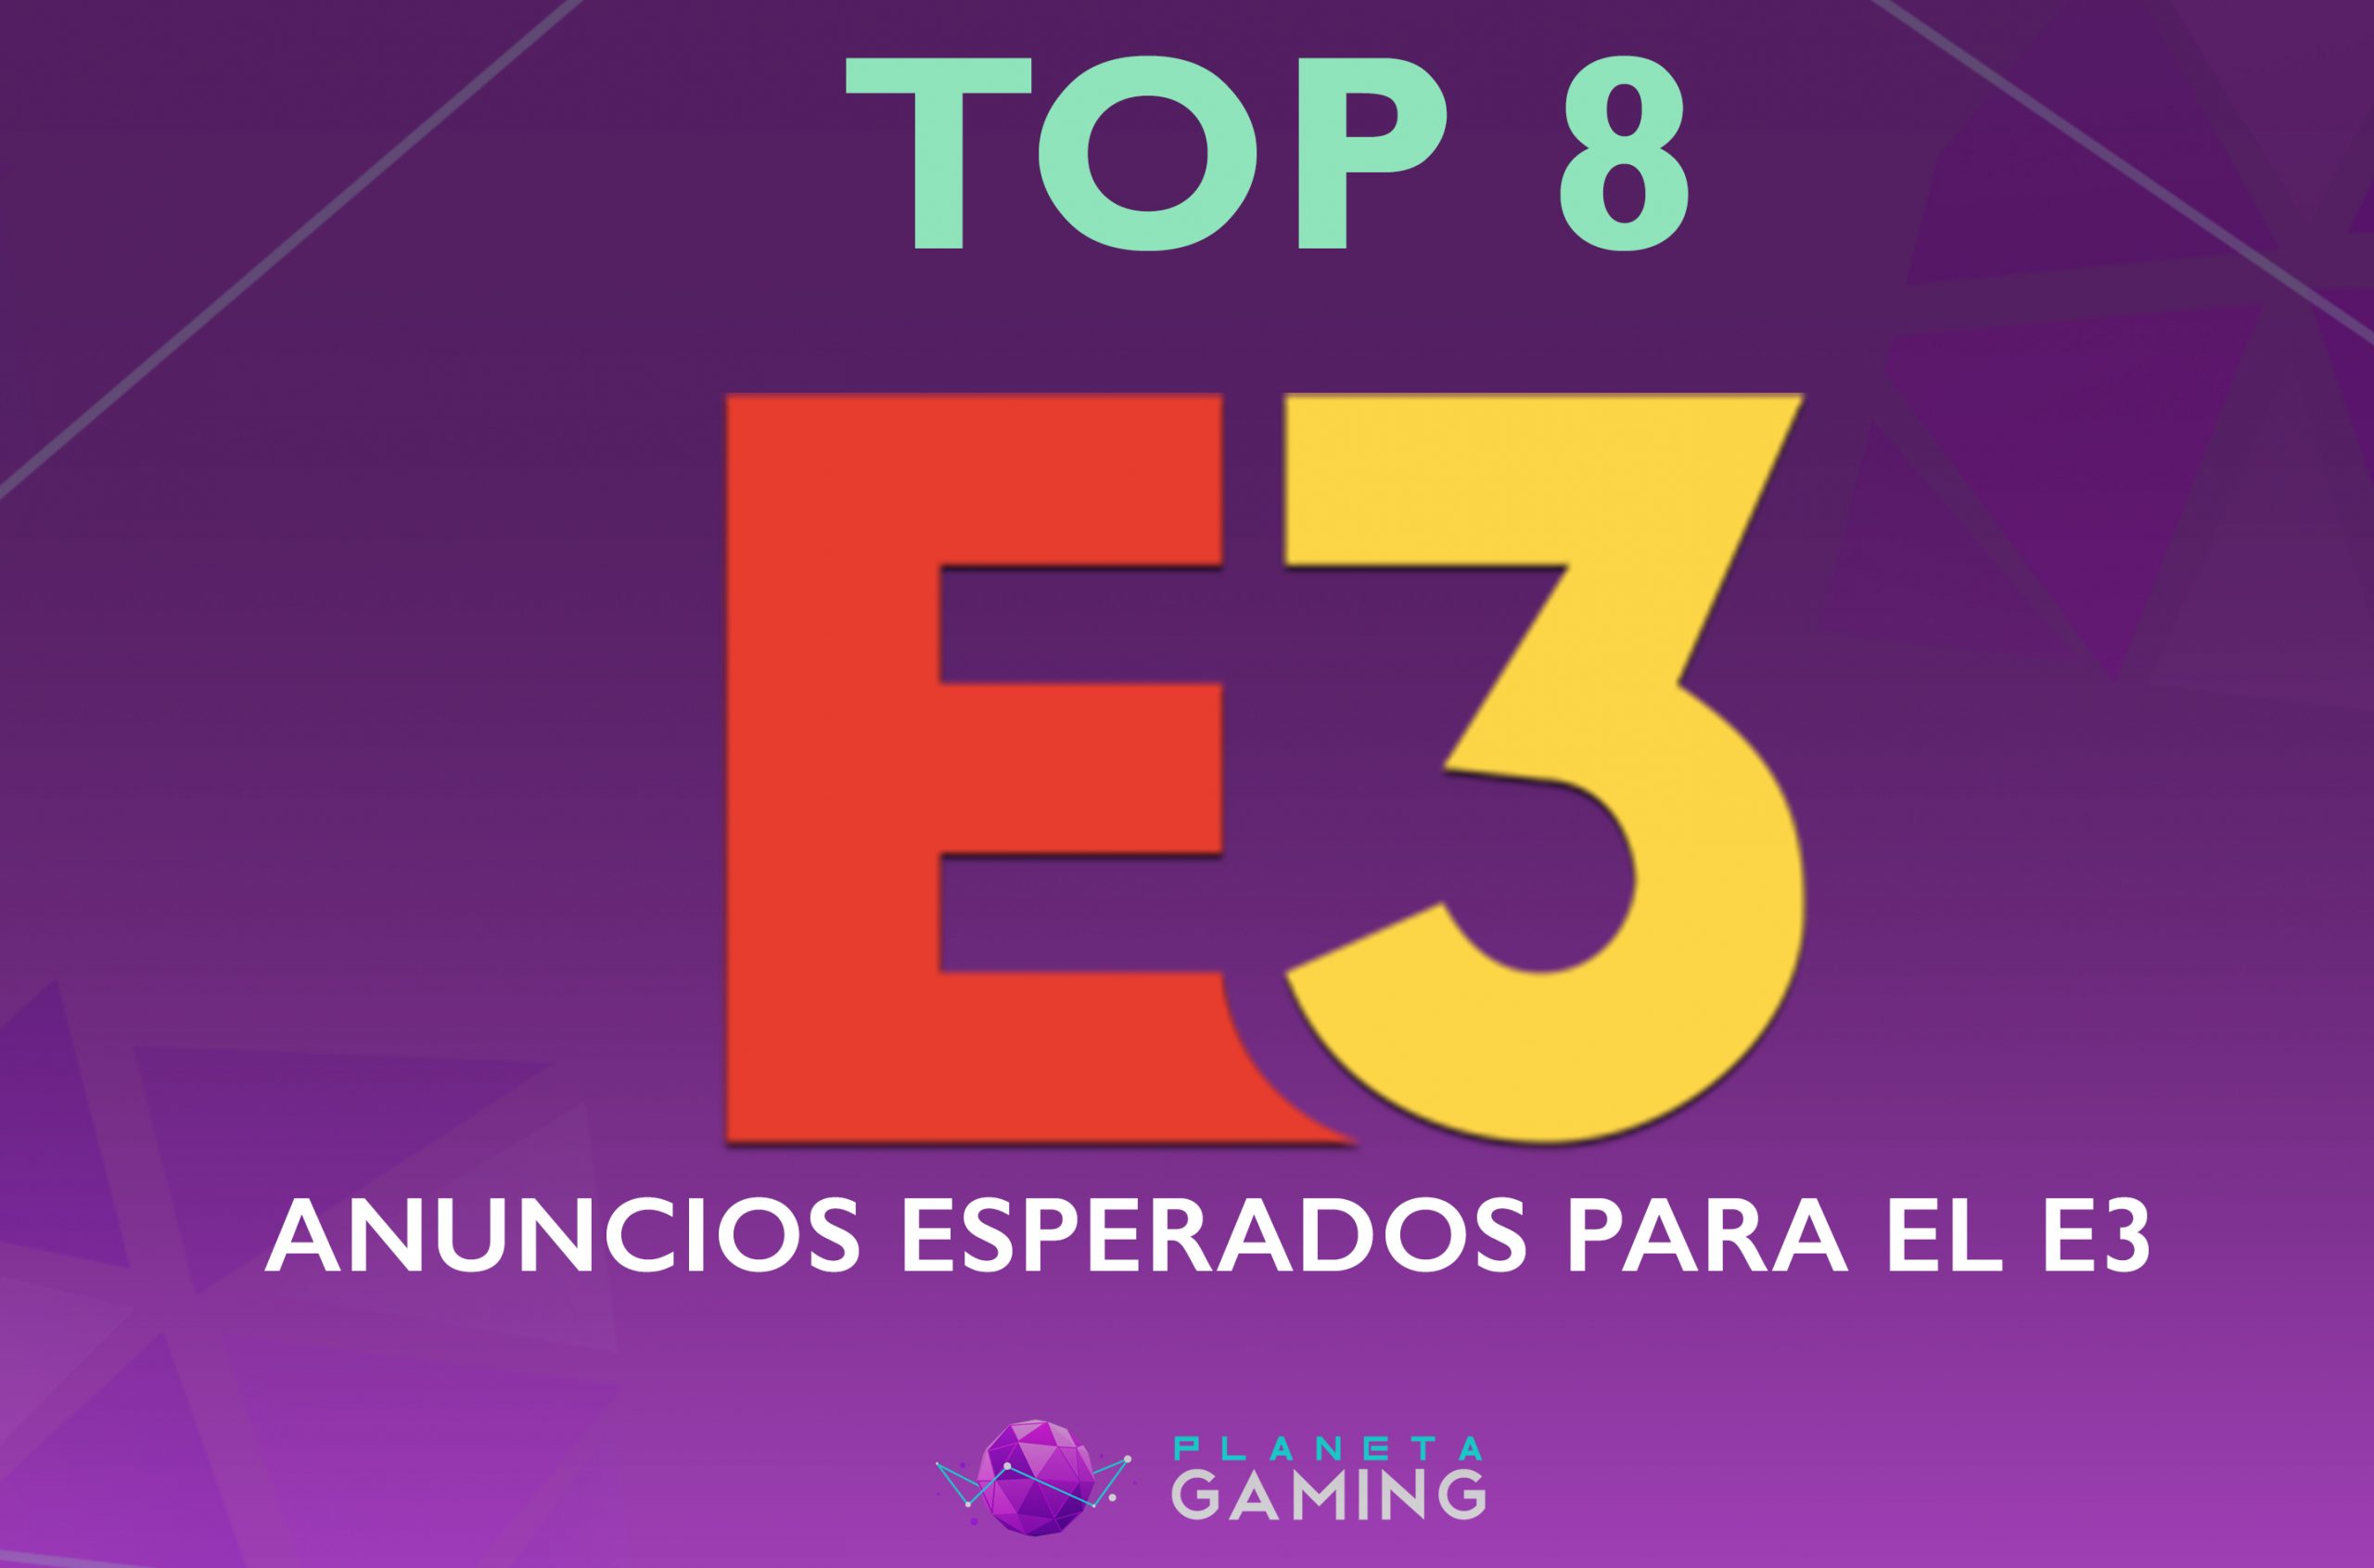 Top 8 de Anuncios para el E3 2018